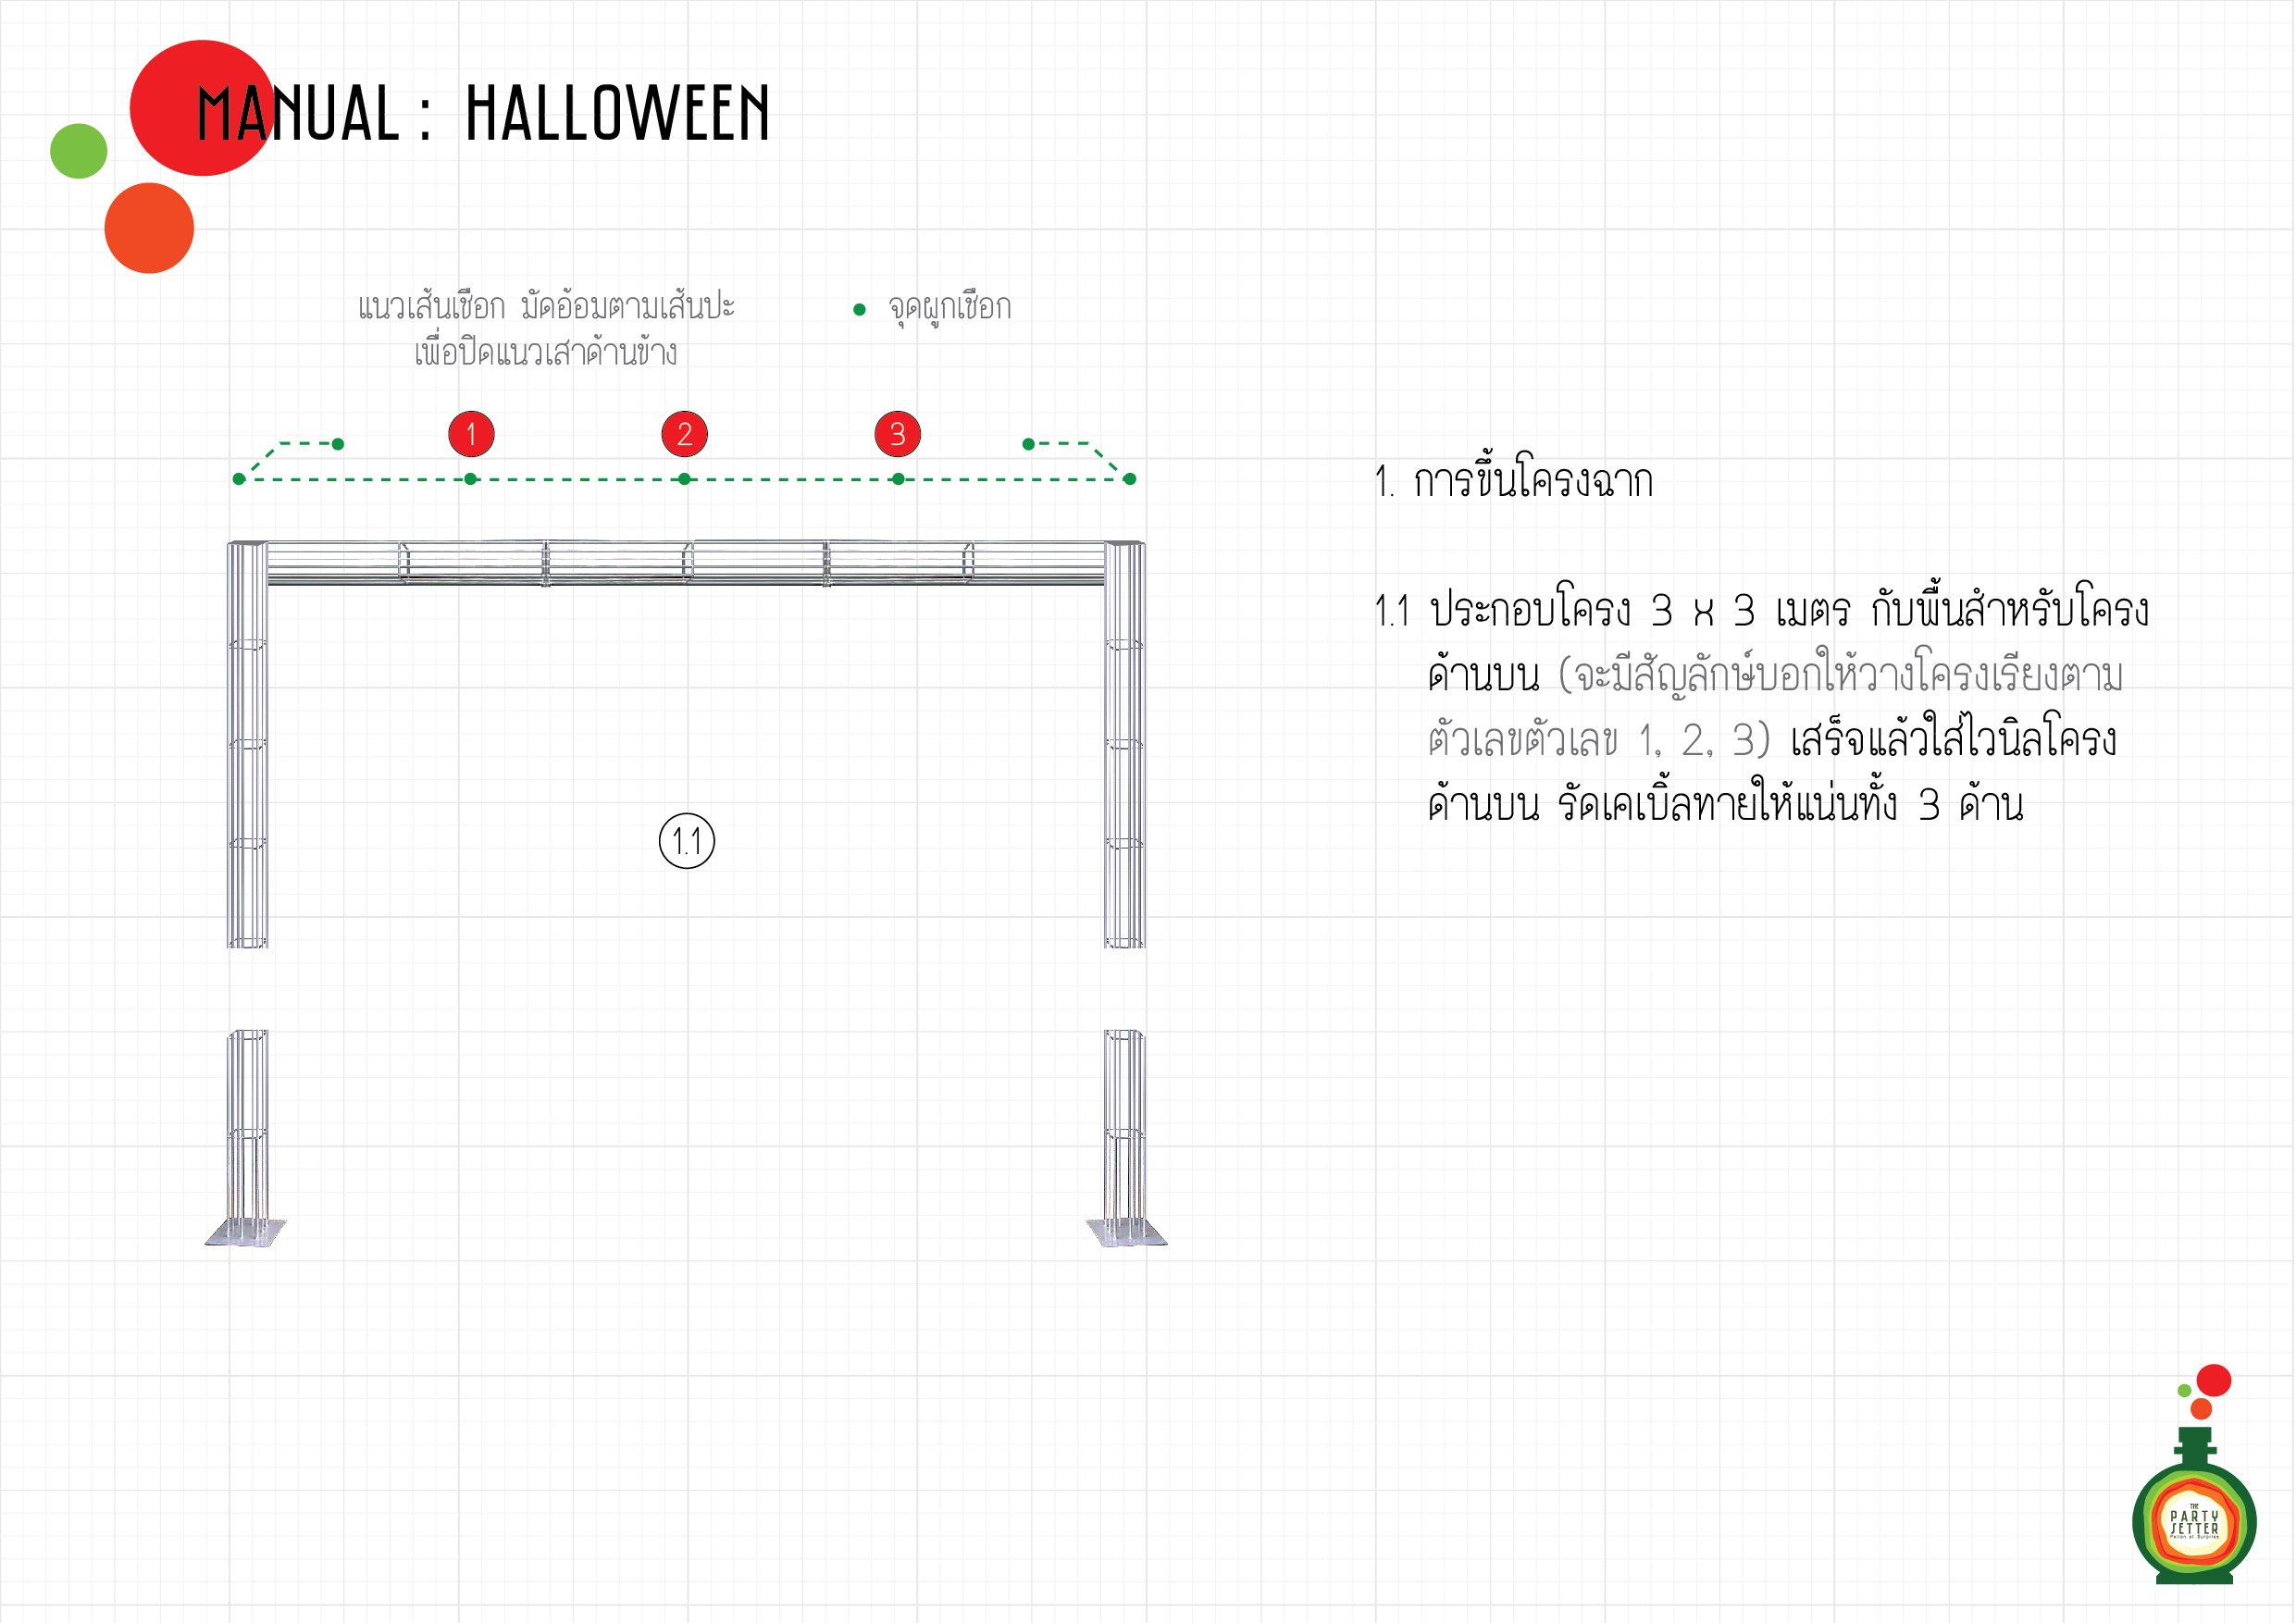 Manual_Halloween_14-01.1-01.jpg